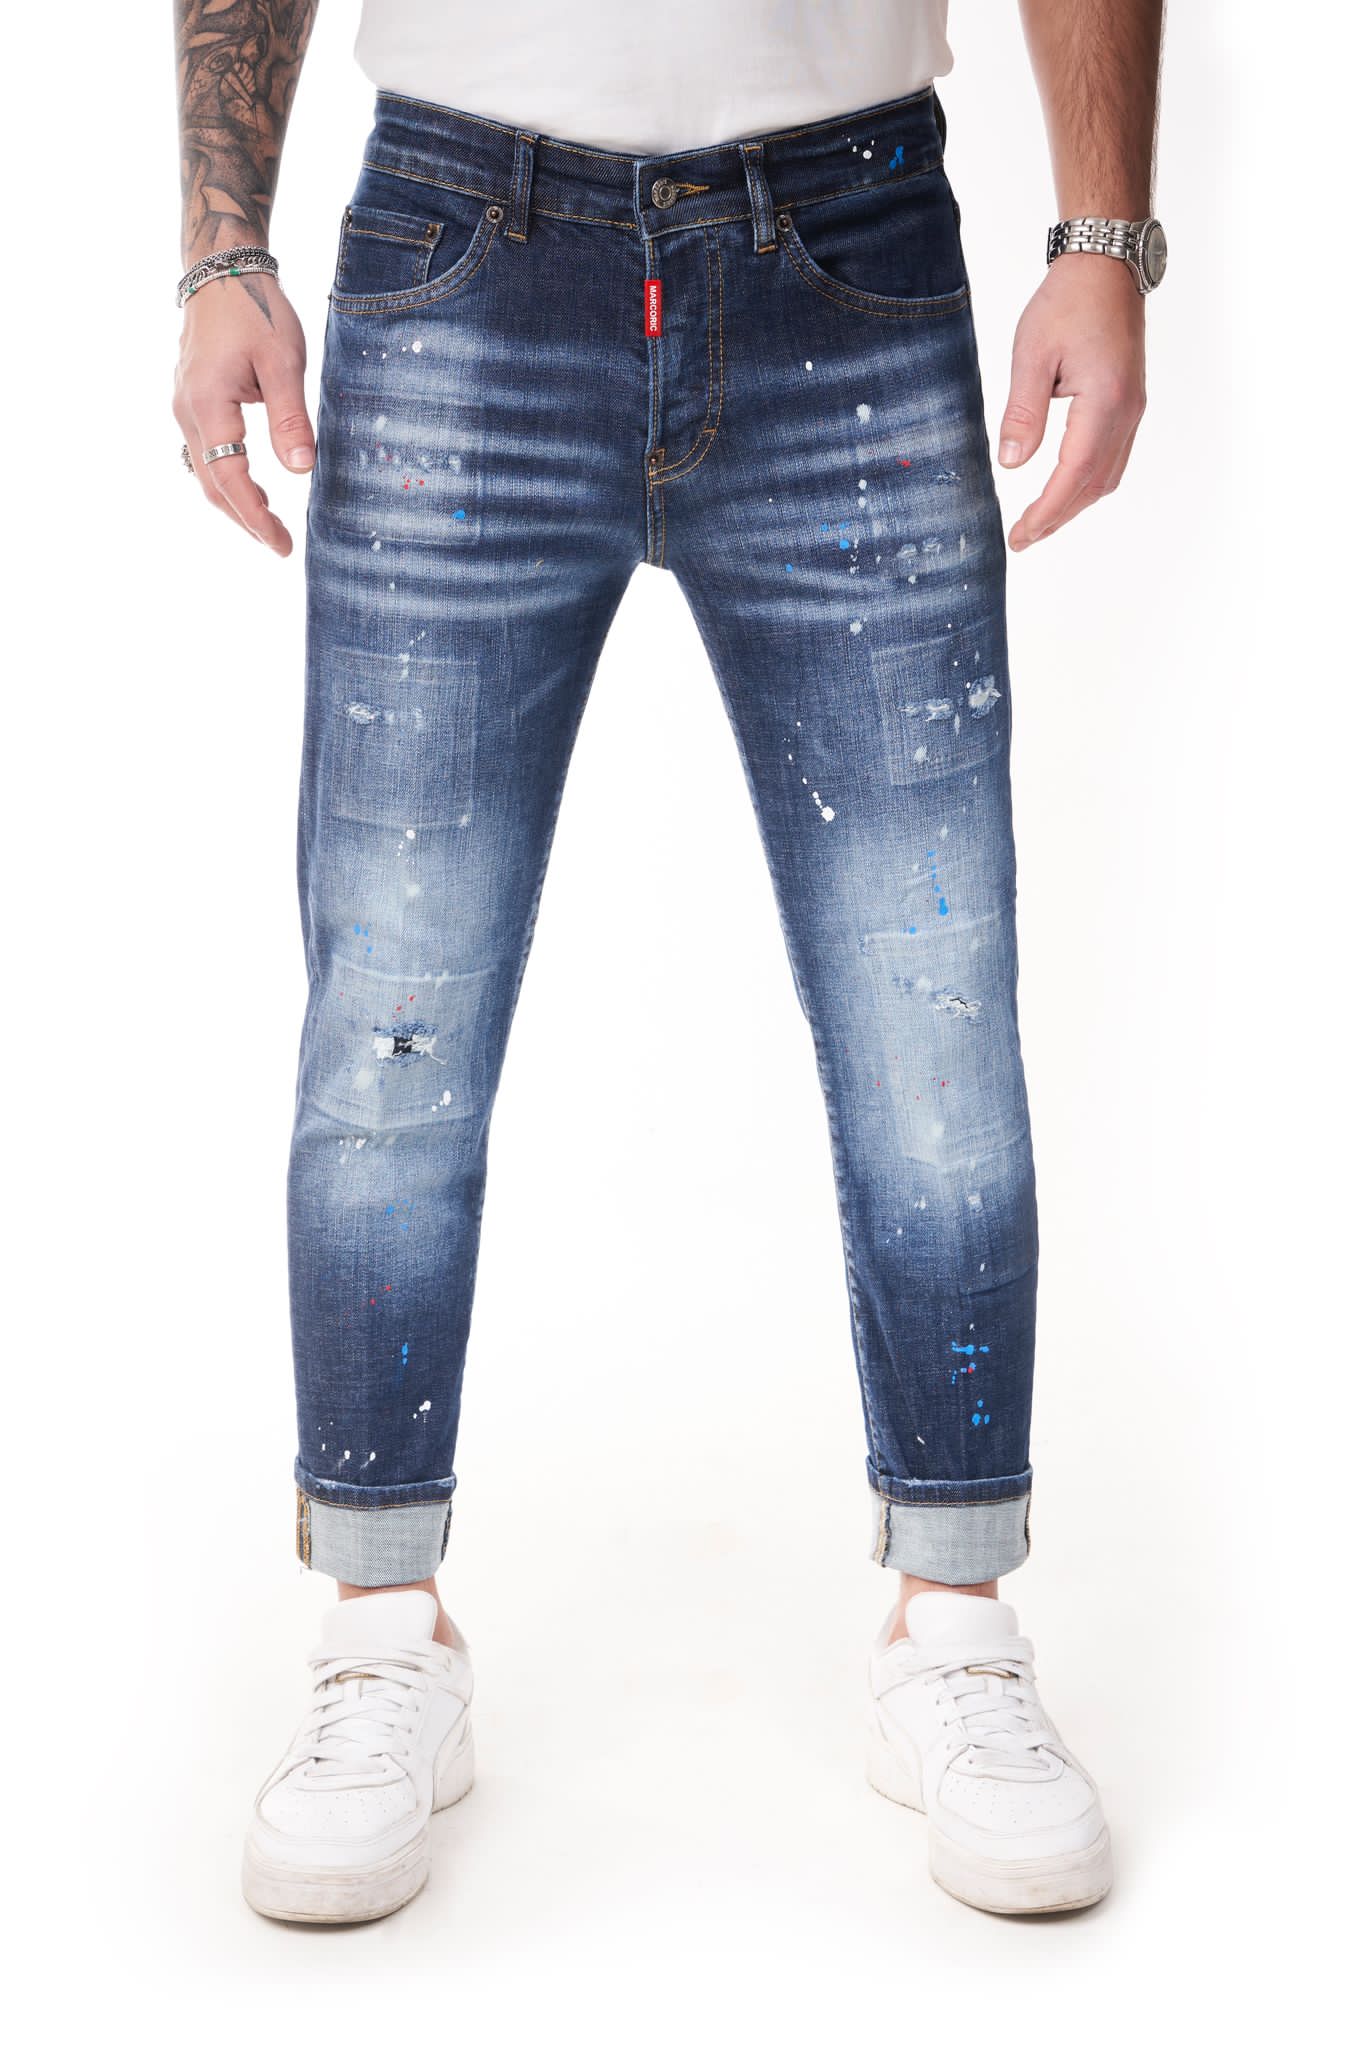 Marcoric jeans